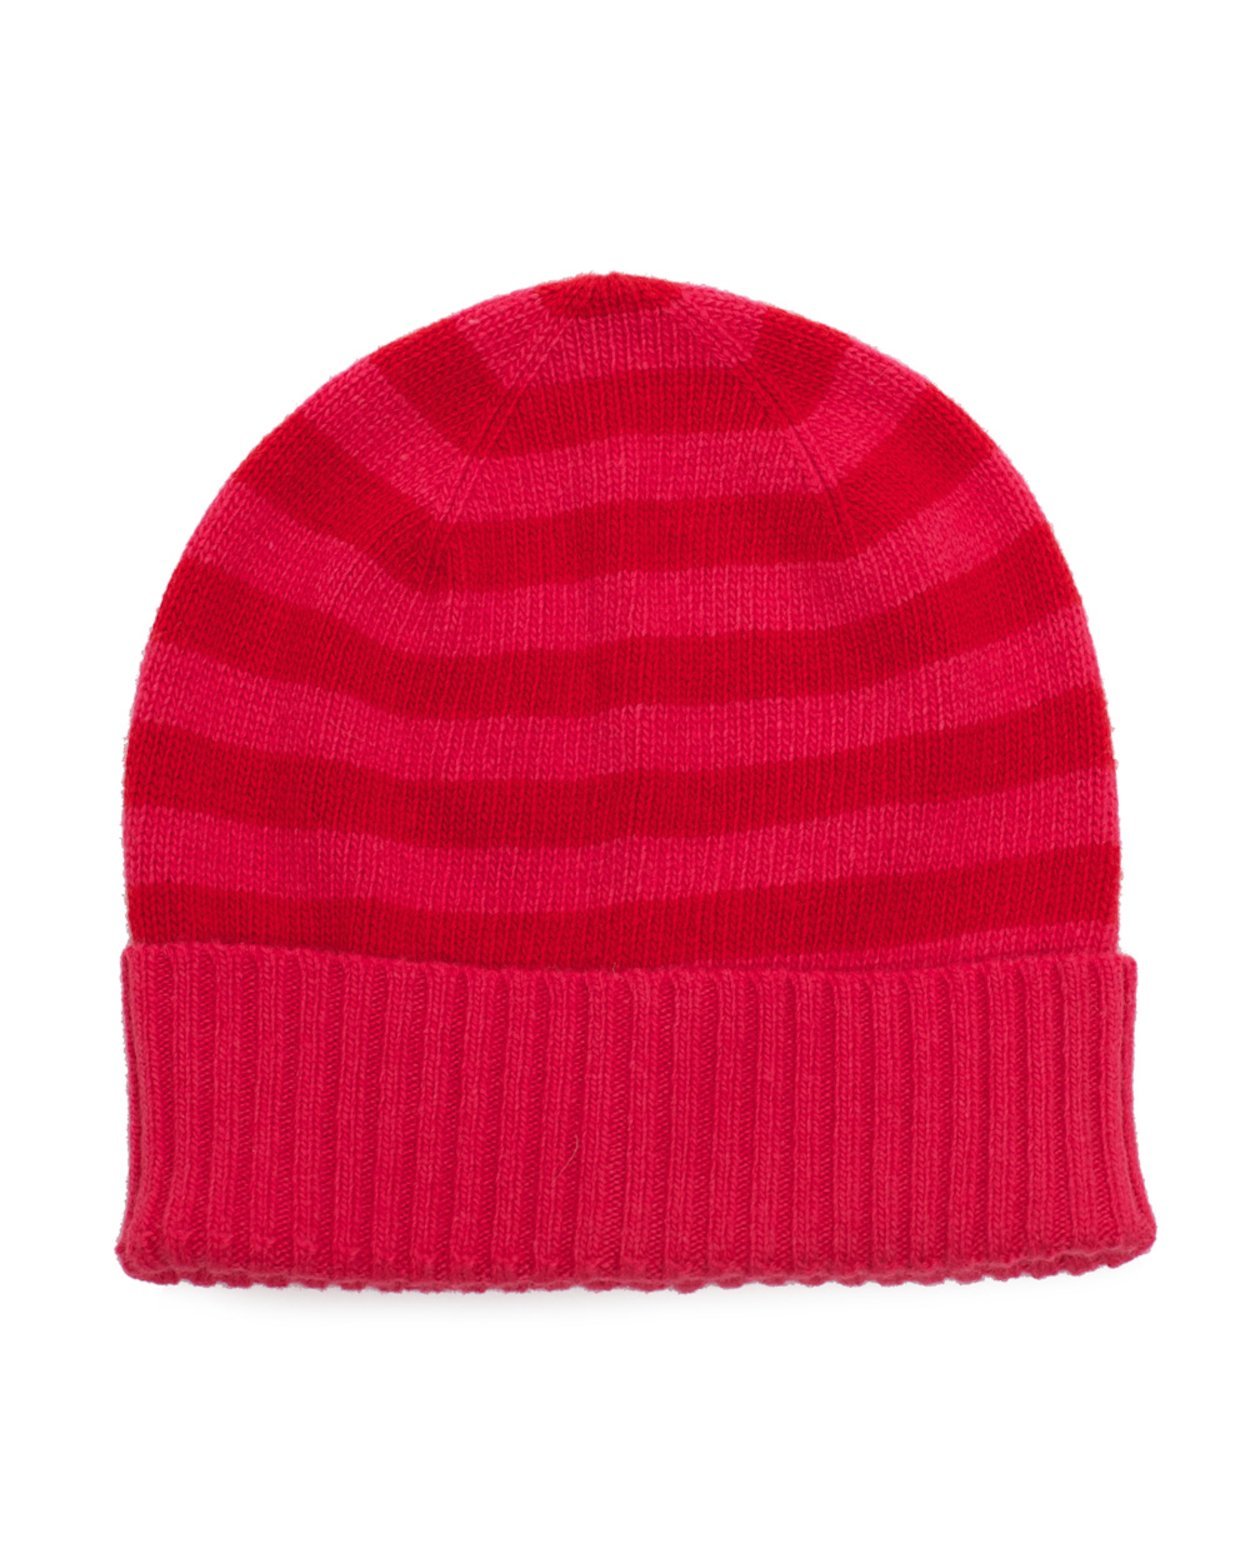 Super Stripe Hat in Pink & Red